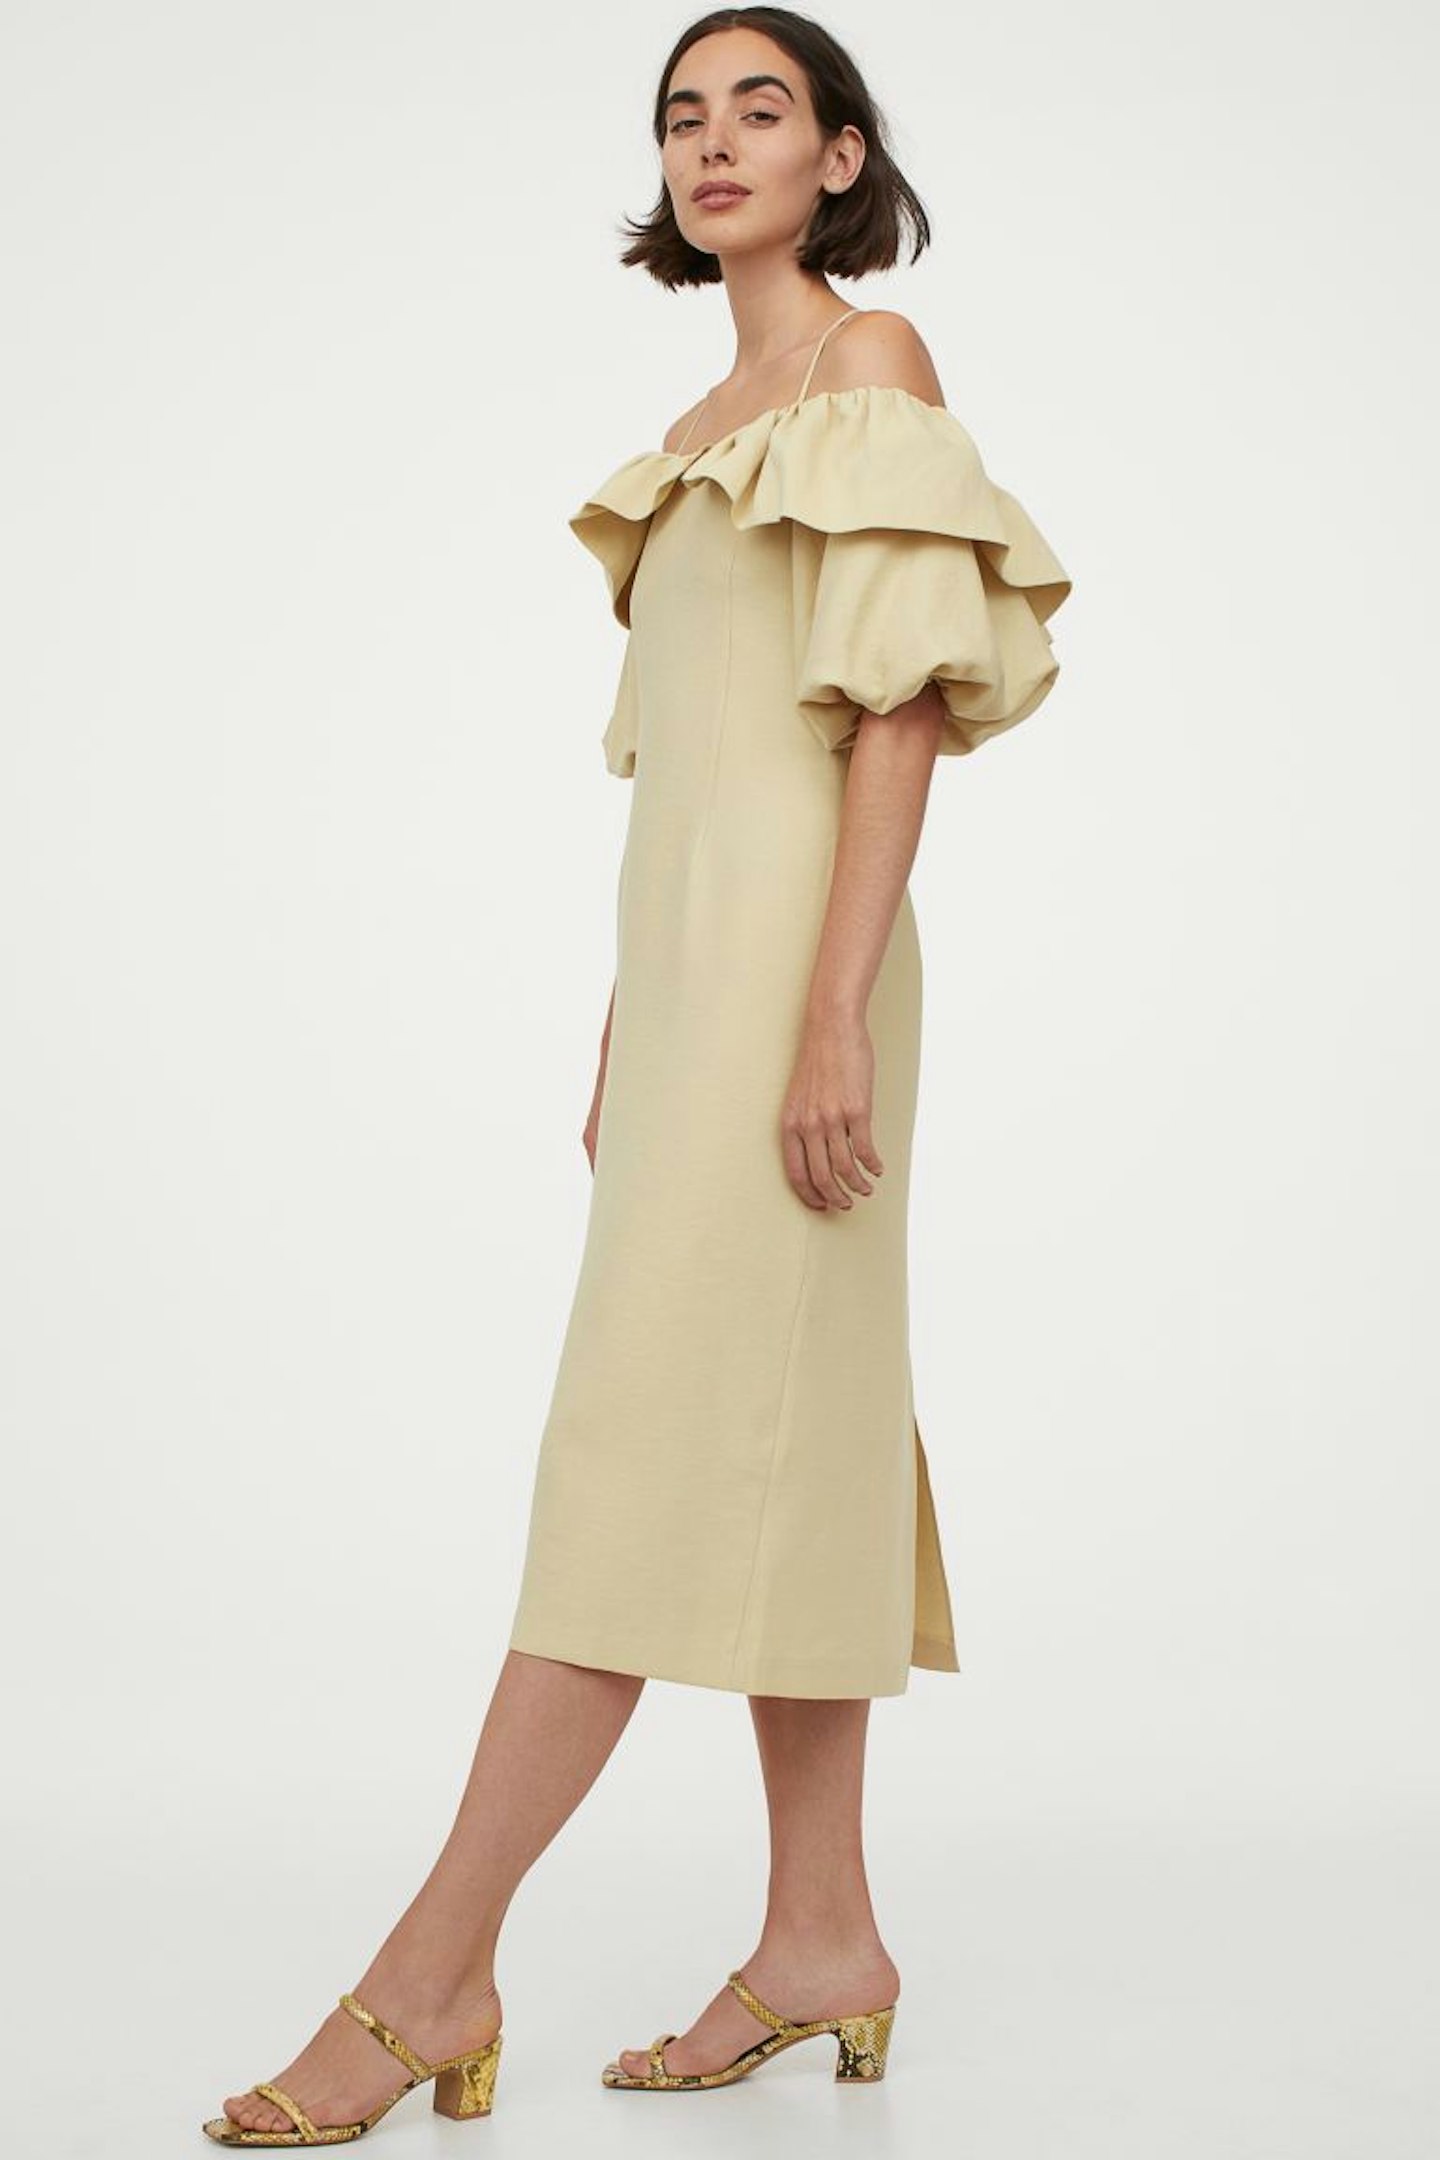 H&M, Lyocell-blend dress, £39.99